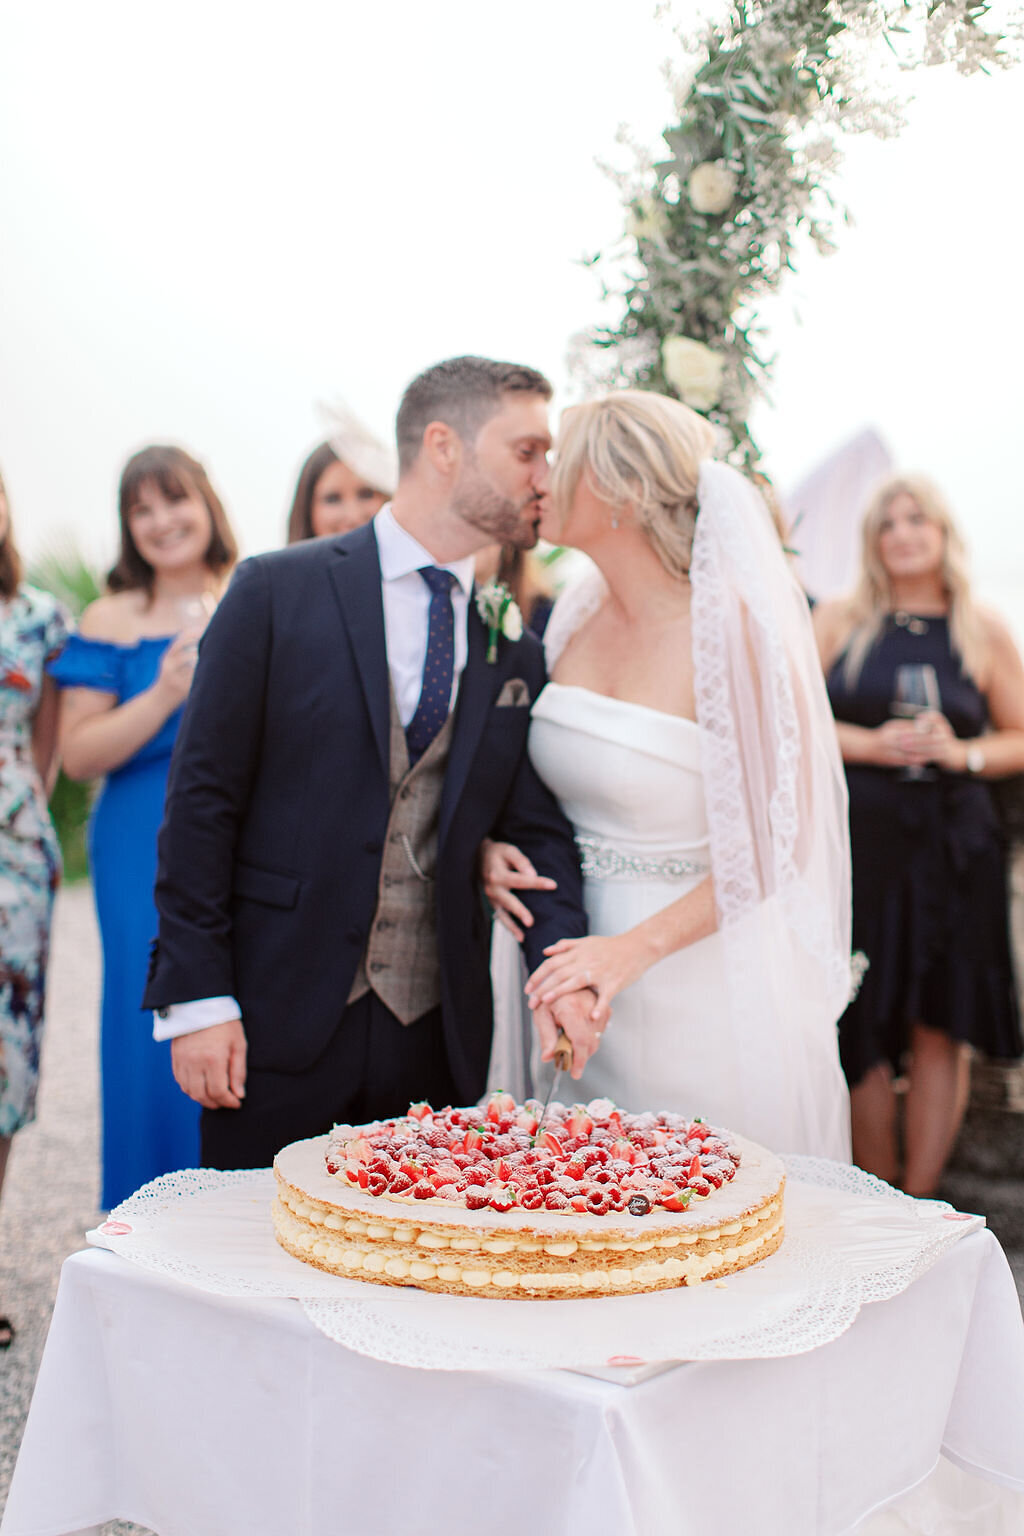 Destination Weddings | Twelfth Night Events - Italy Wedding Planner62